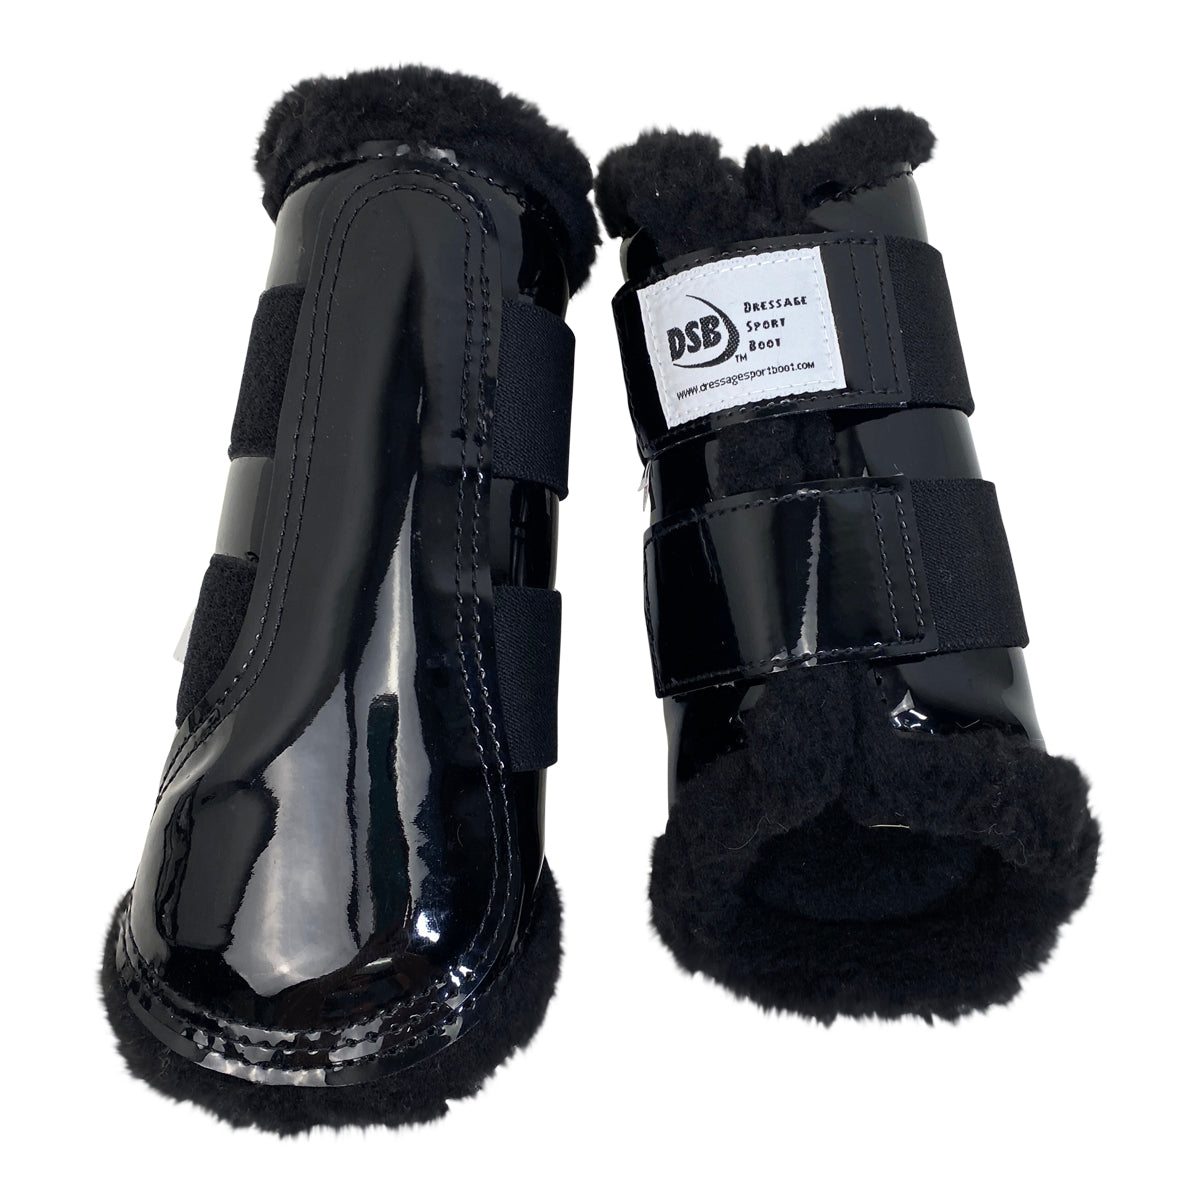 Dressage Sport Boot Original Boots in Glossy Black